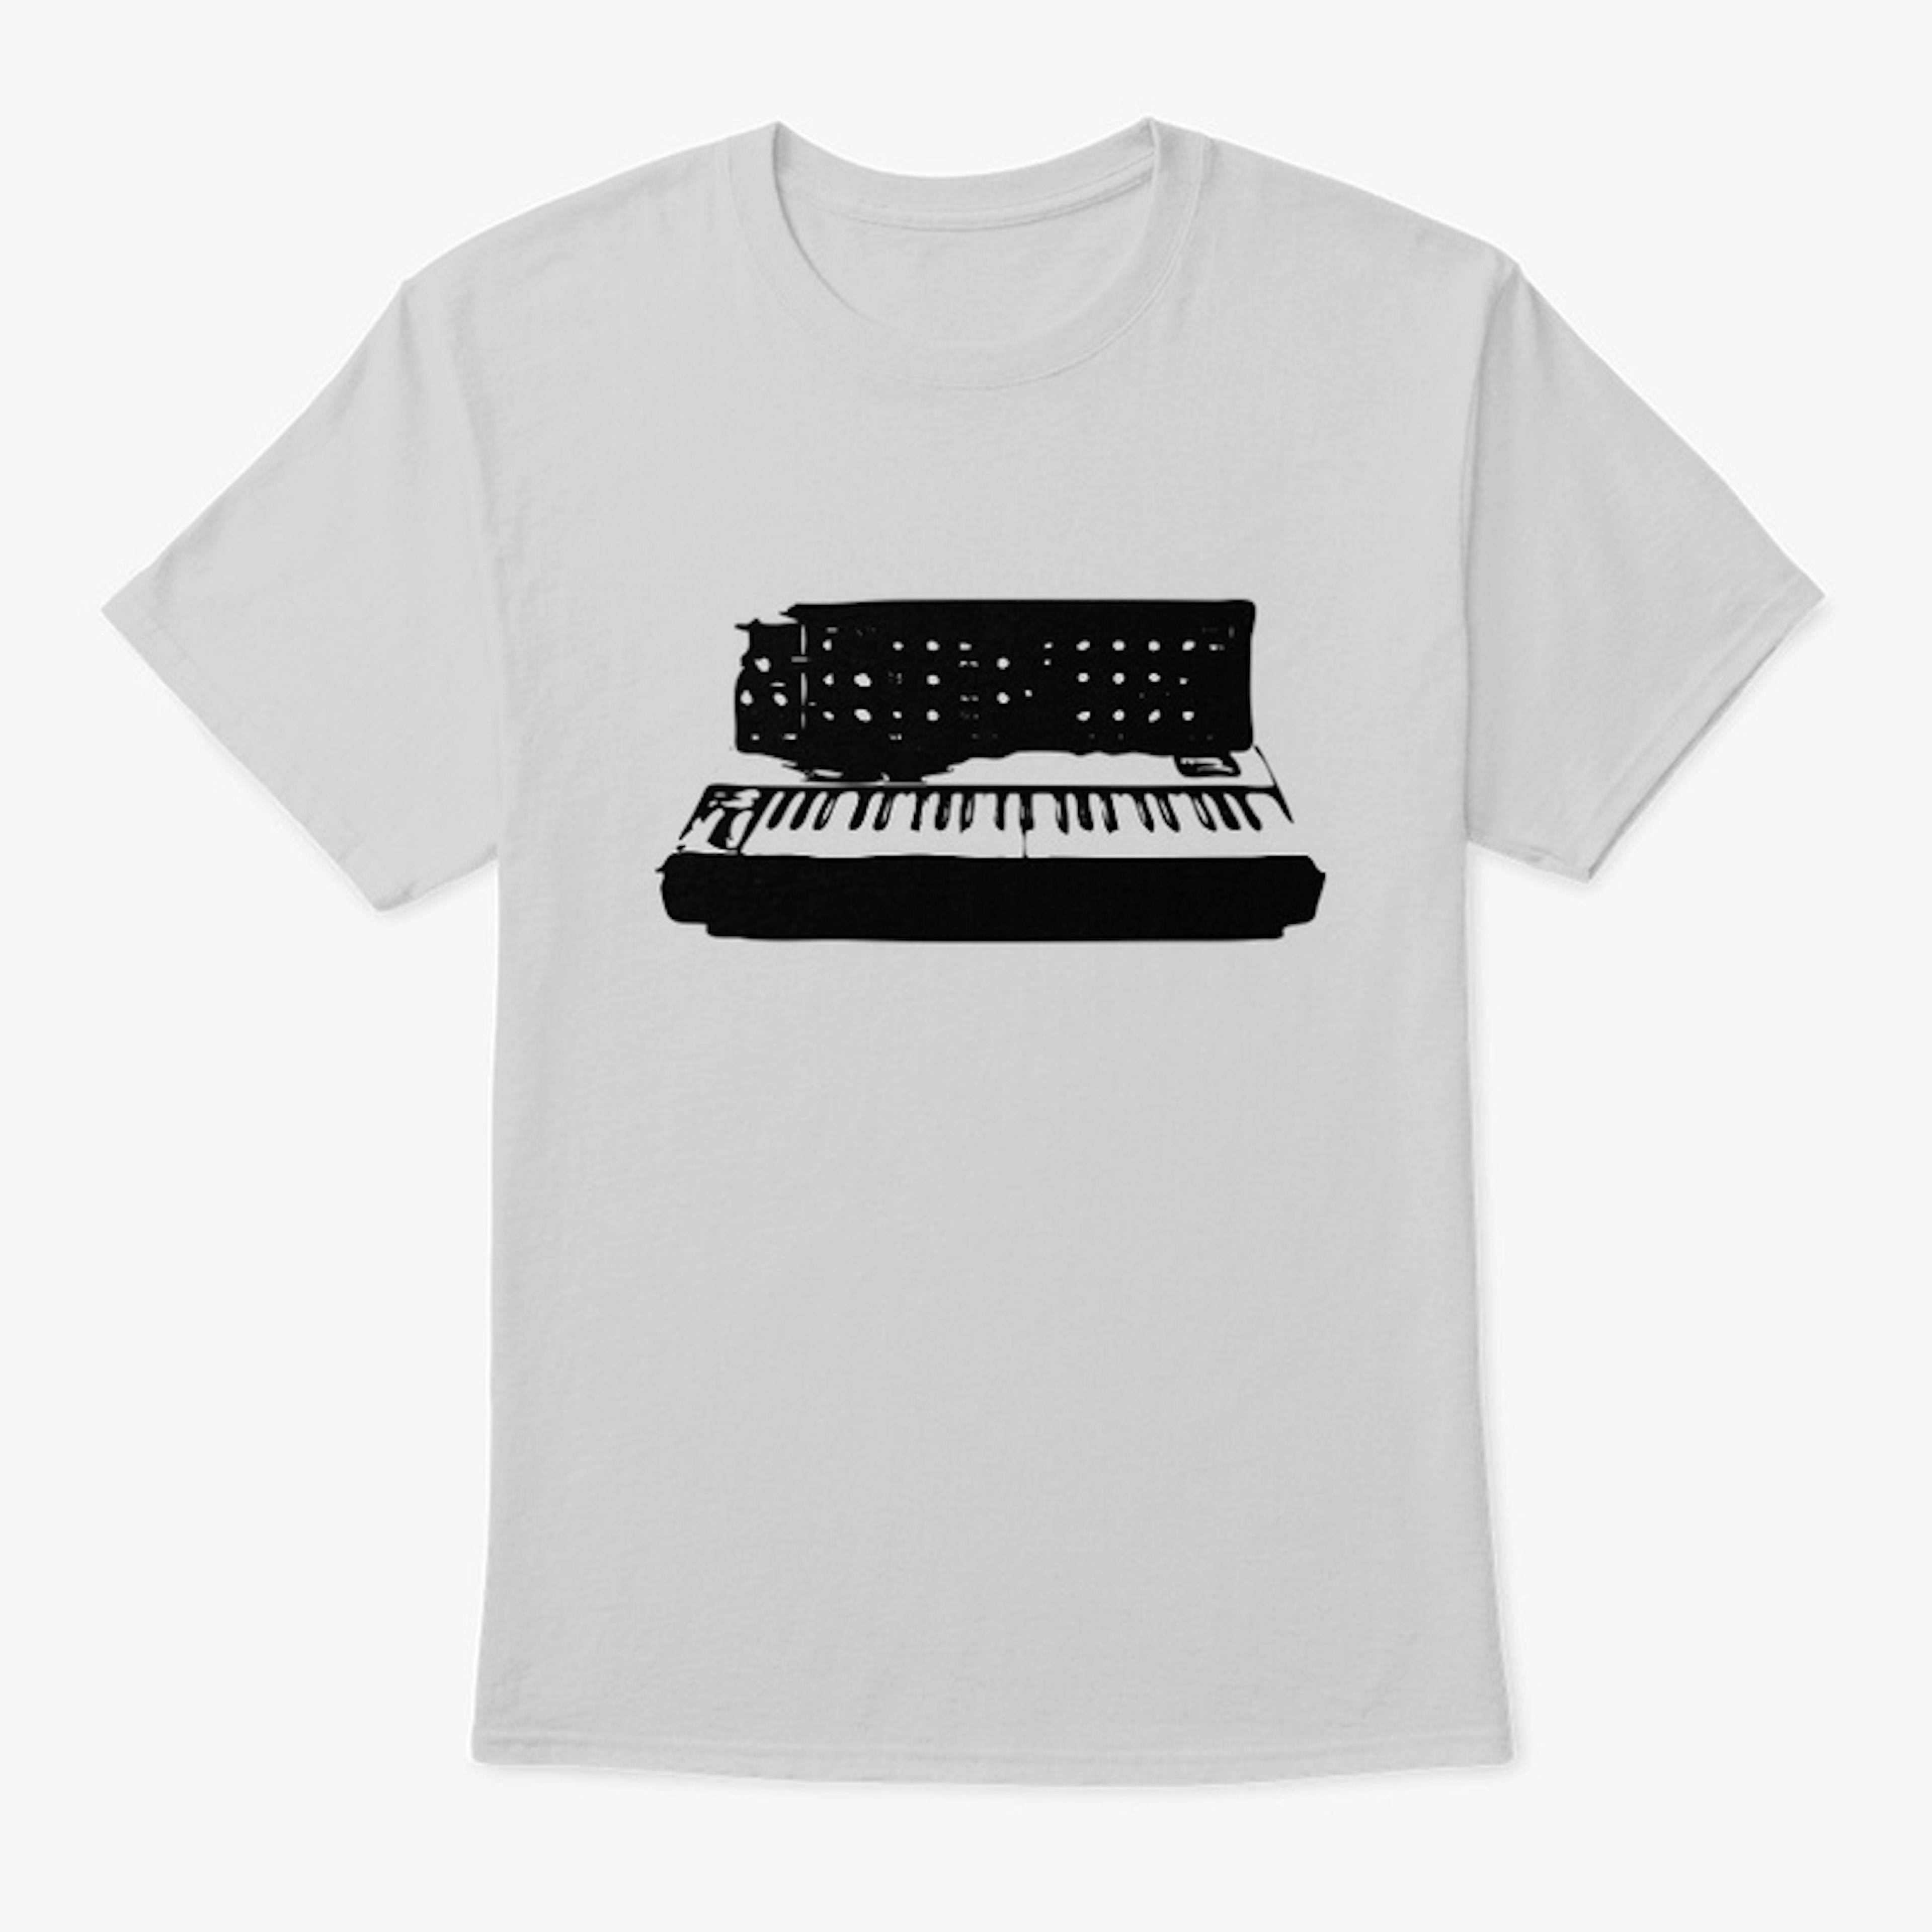 Classic Synthesizer Shirt - Monochrome